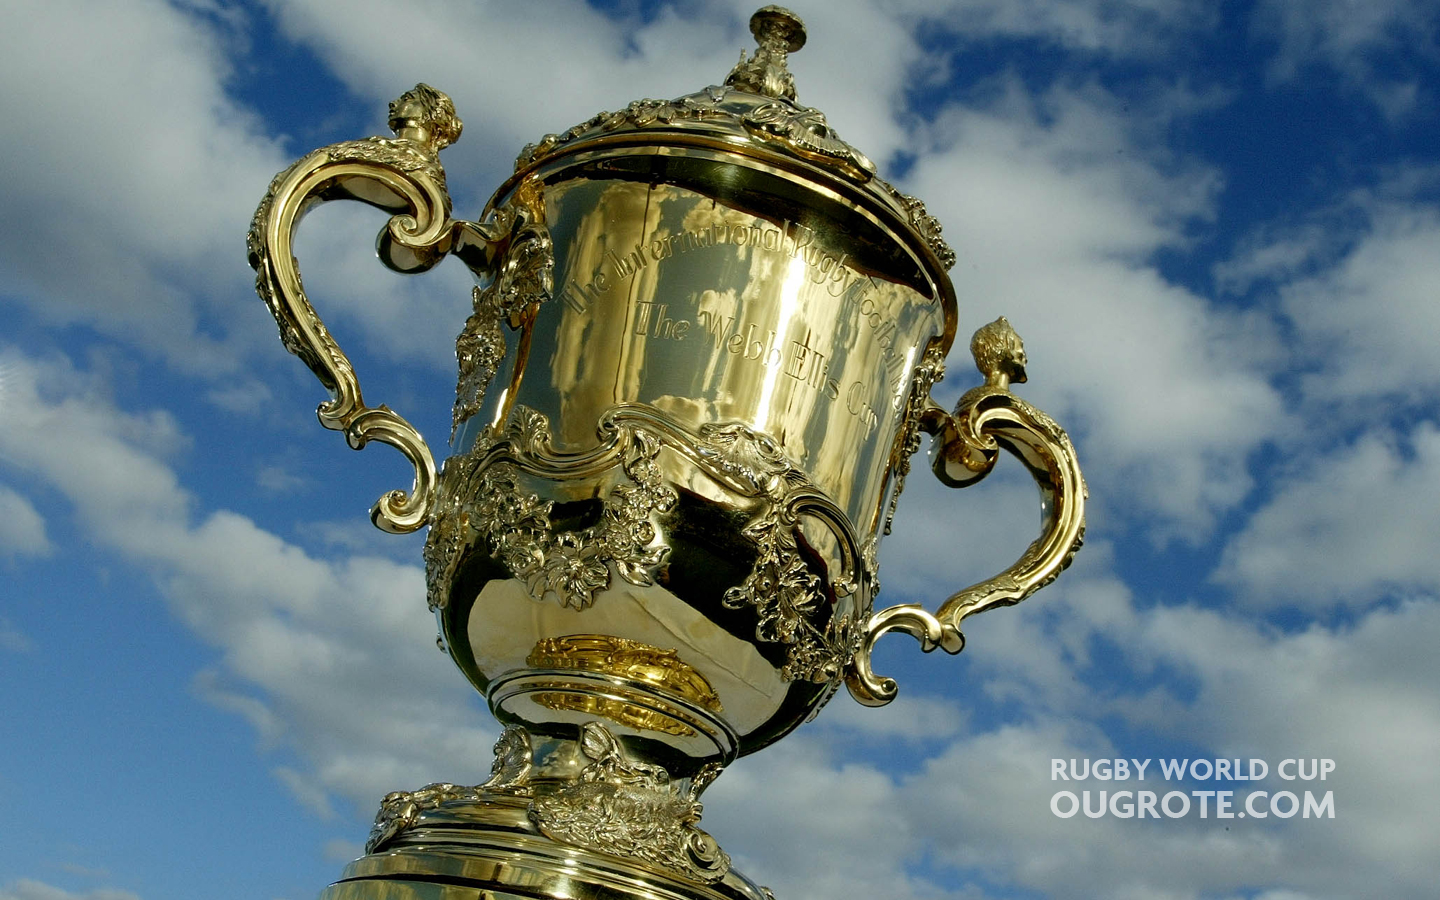 http://2.bp.blogspot.com/-3ylFcuHfkWs/Ts4LLDVfhSI/AAAAAAAAAOI/4D7FzH3TD6Q/s1600/Rugby+Cup.jpg